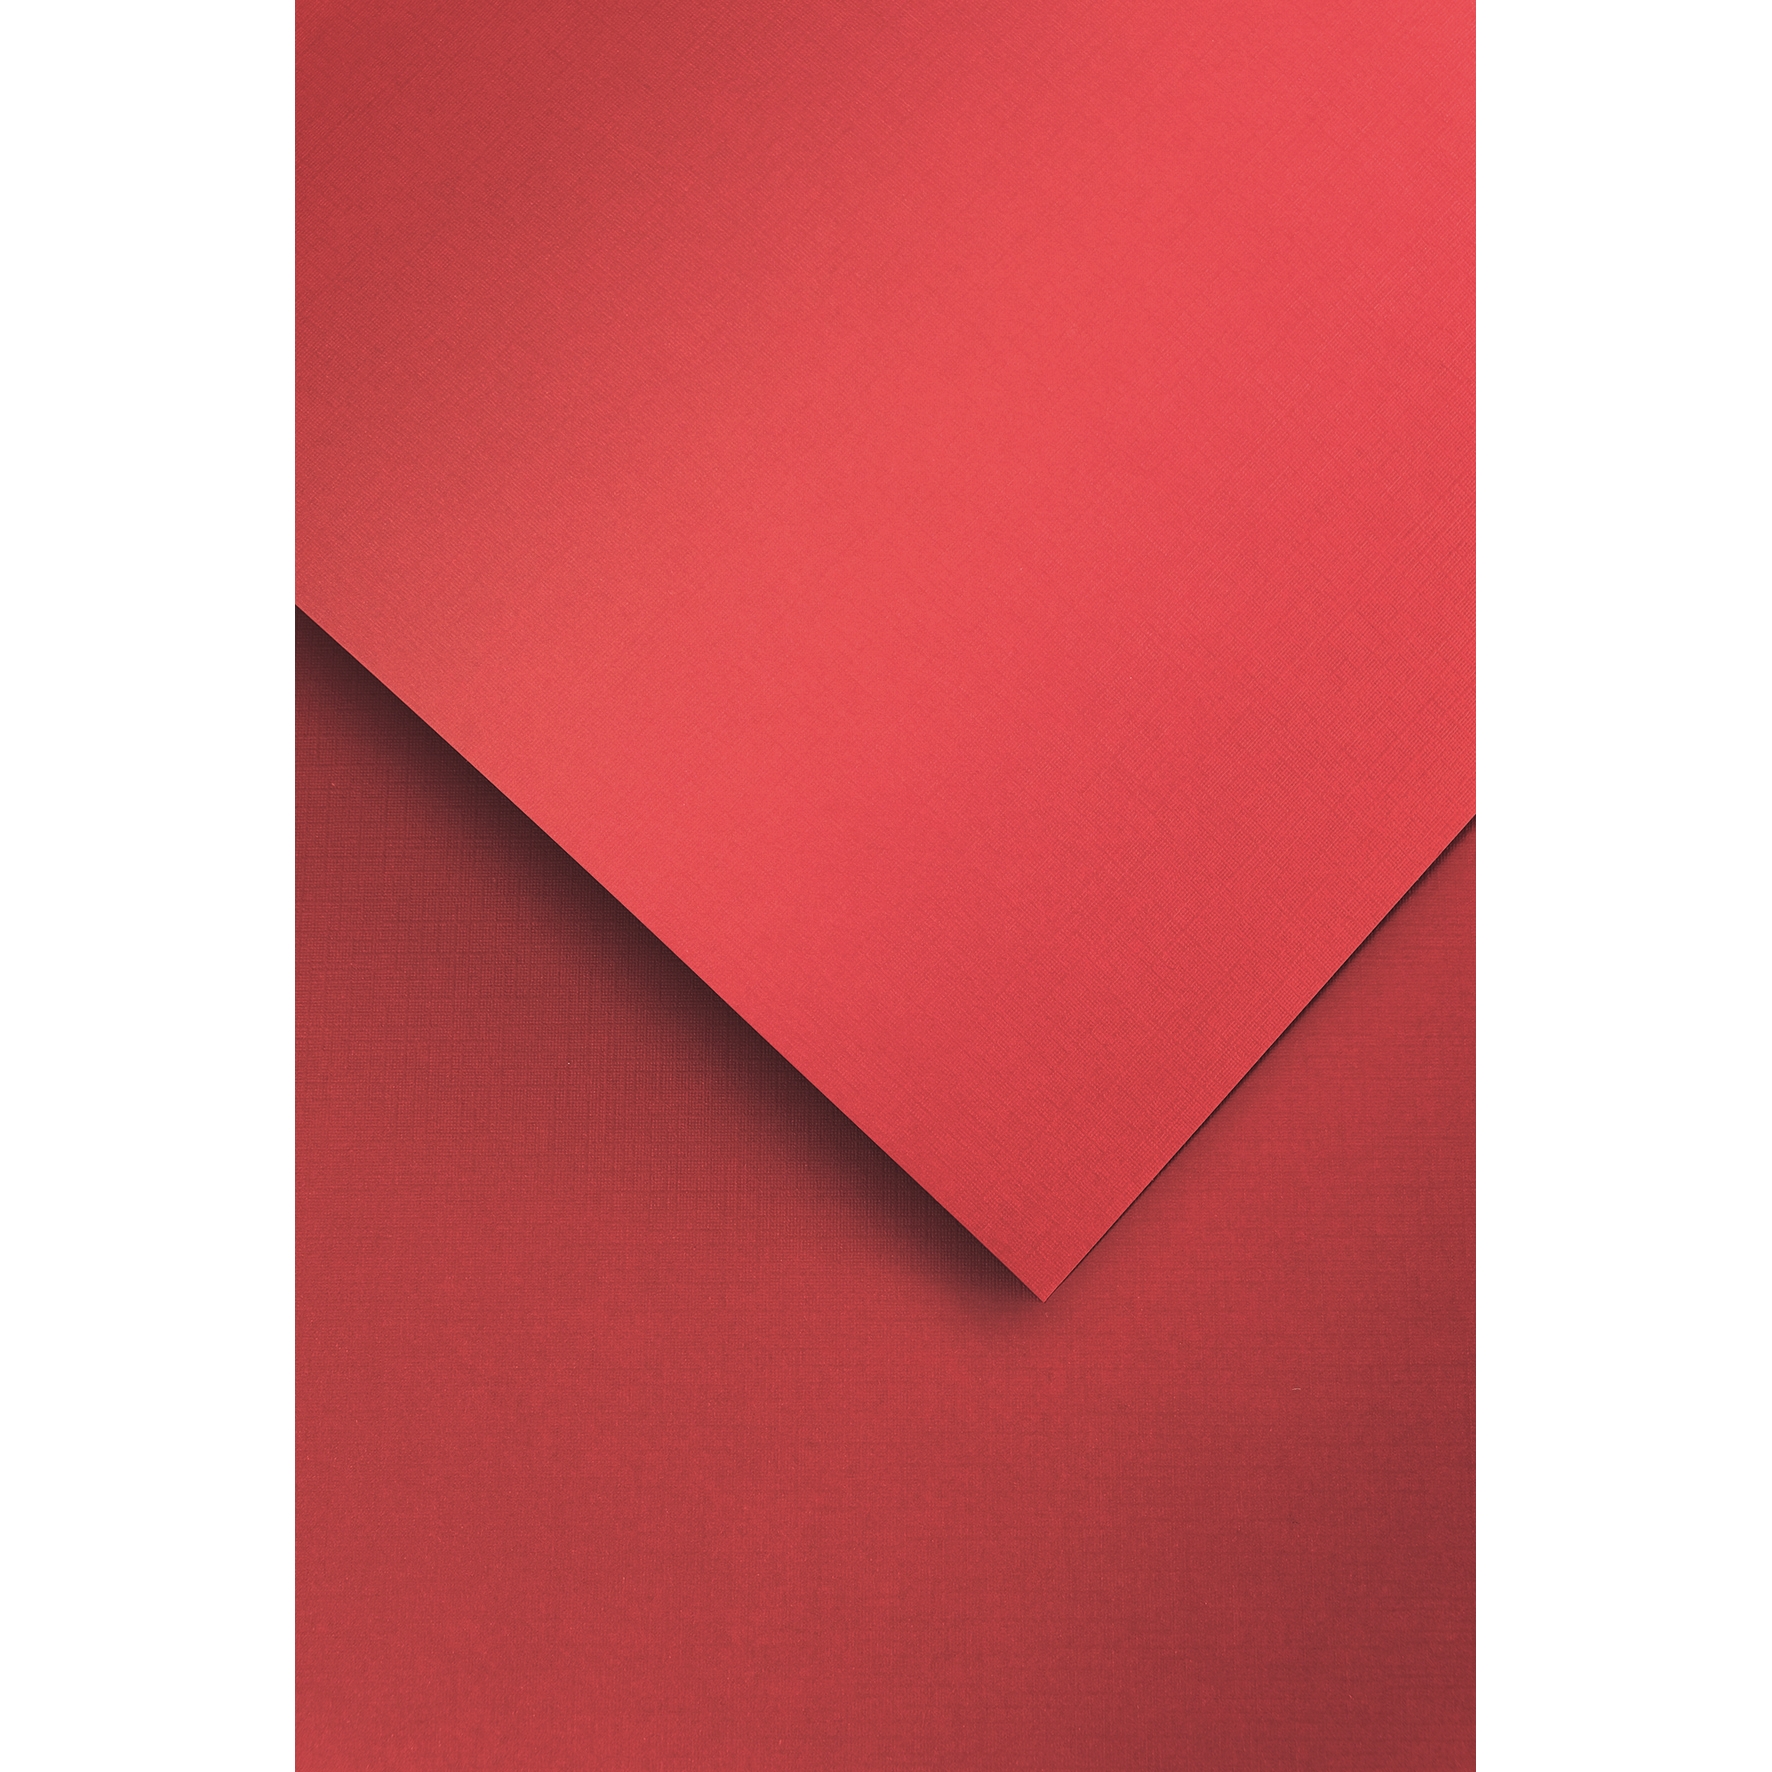 Ozdobný papír Holland, červený, 220g, 20ks